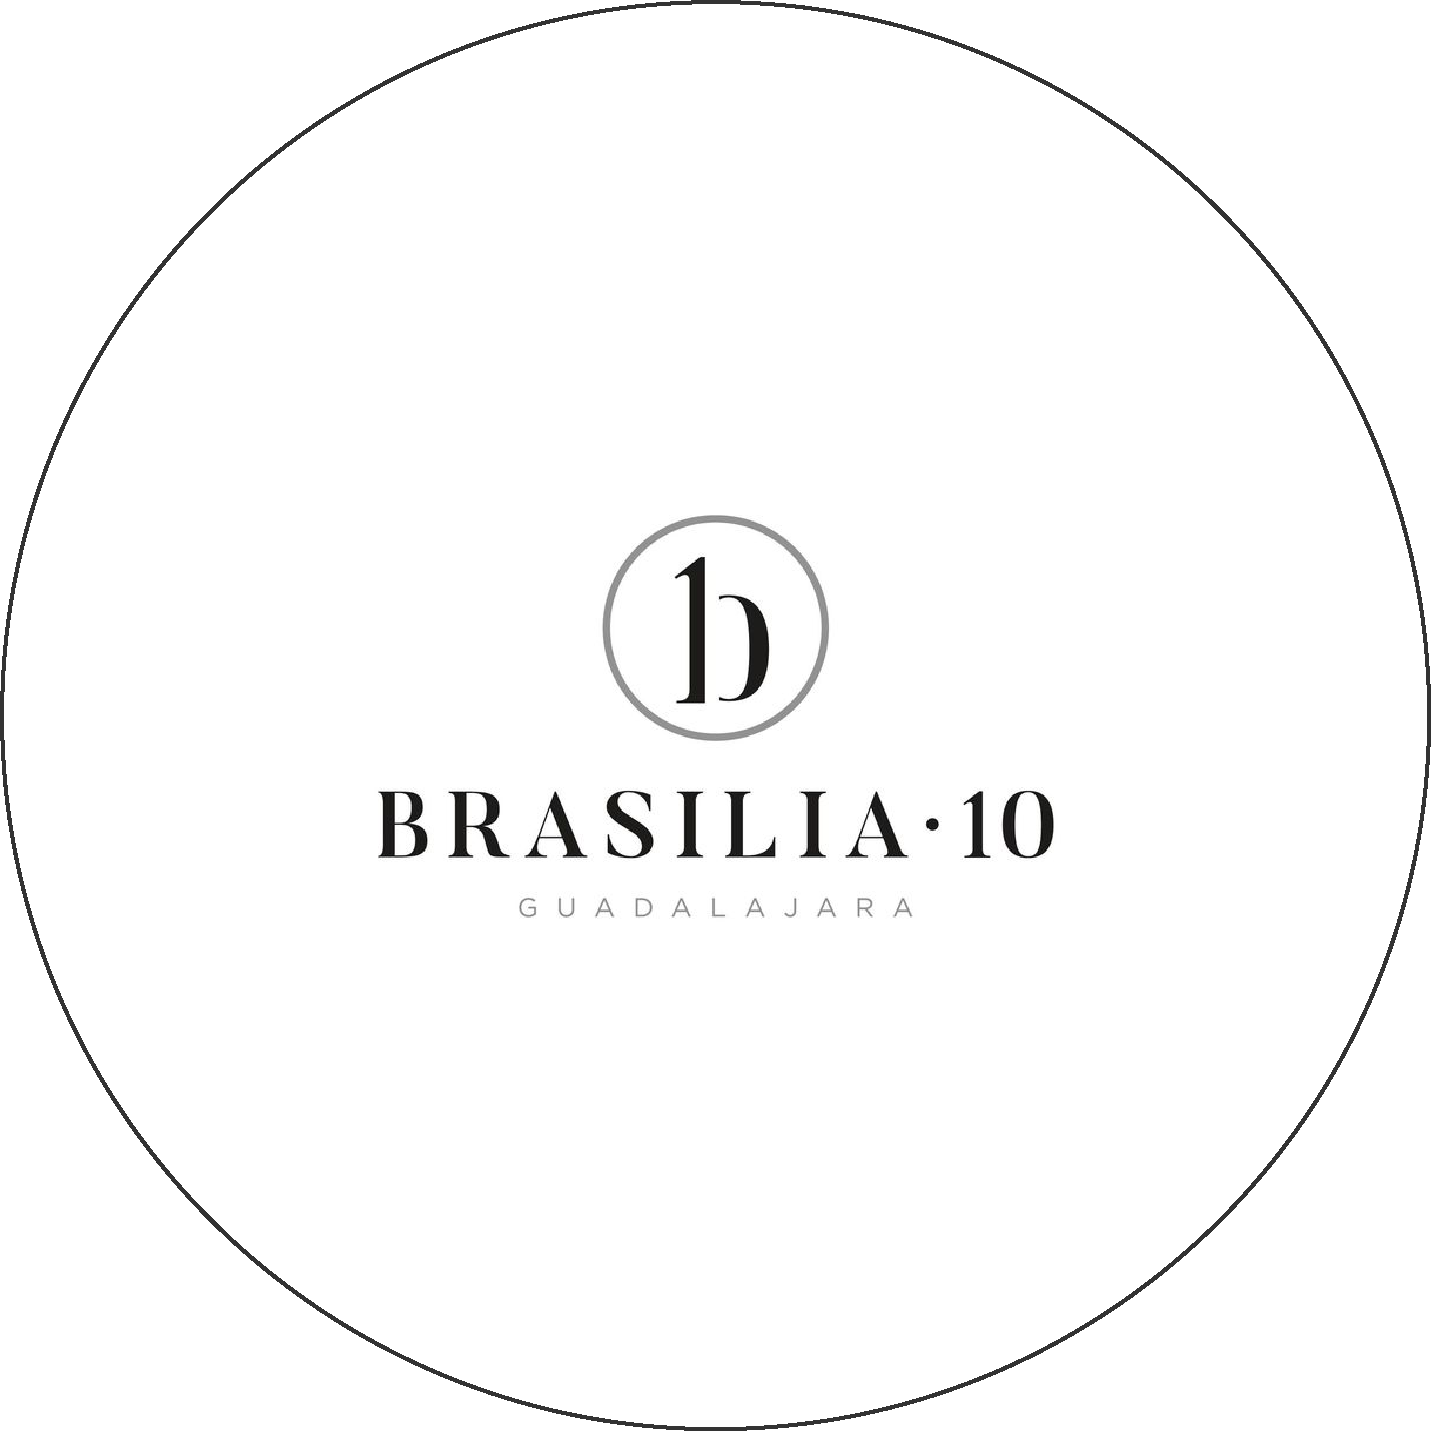 BRASILIA 10